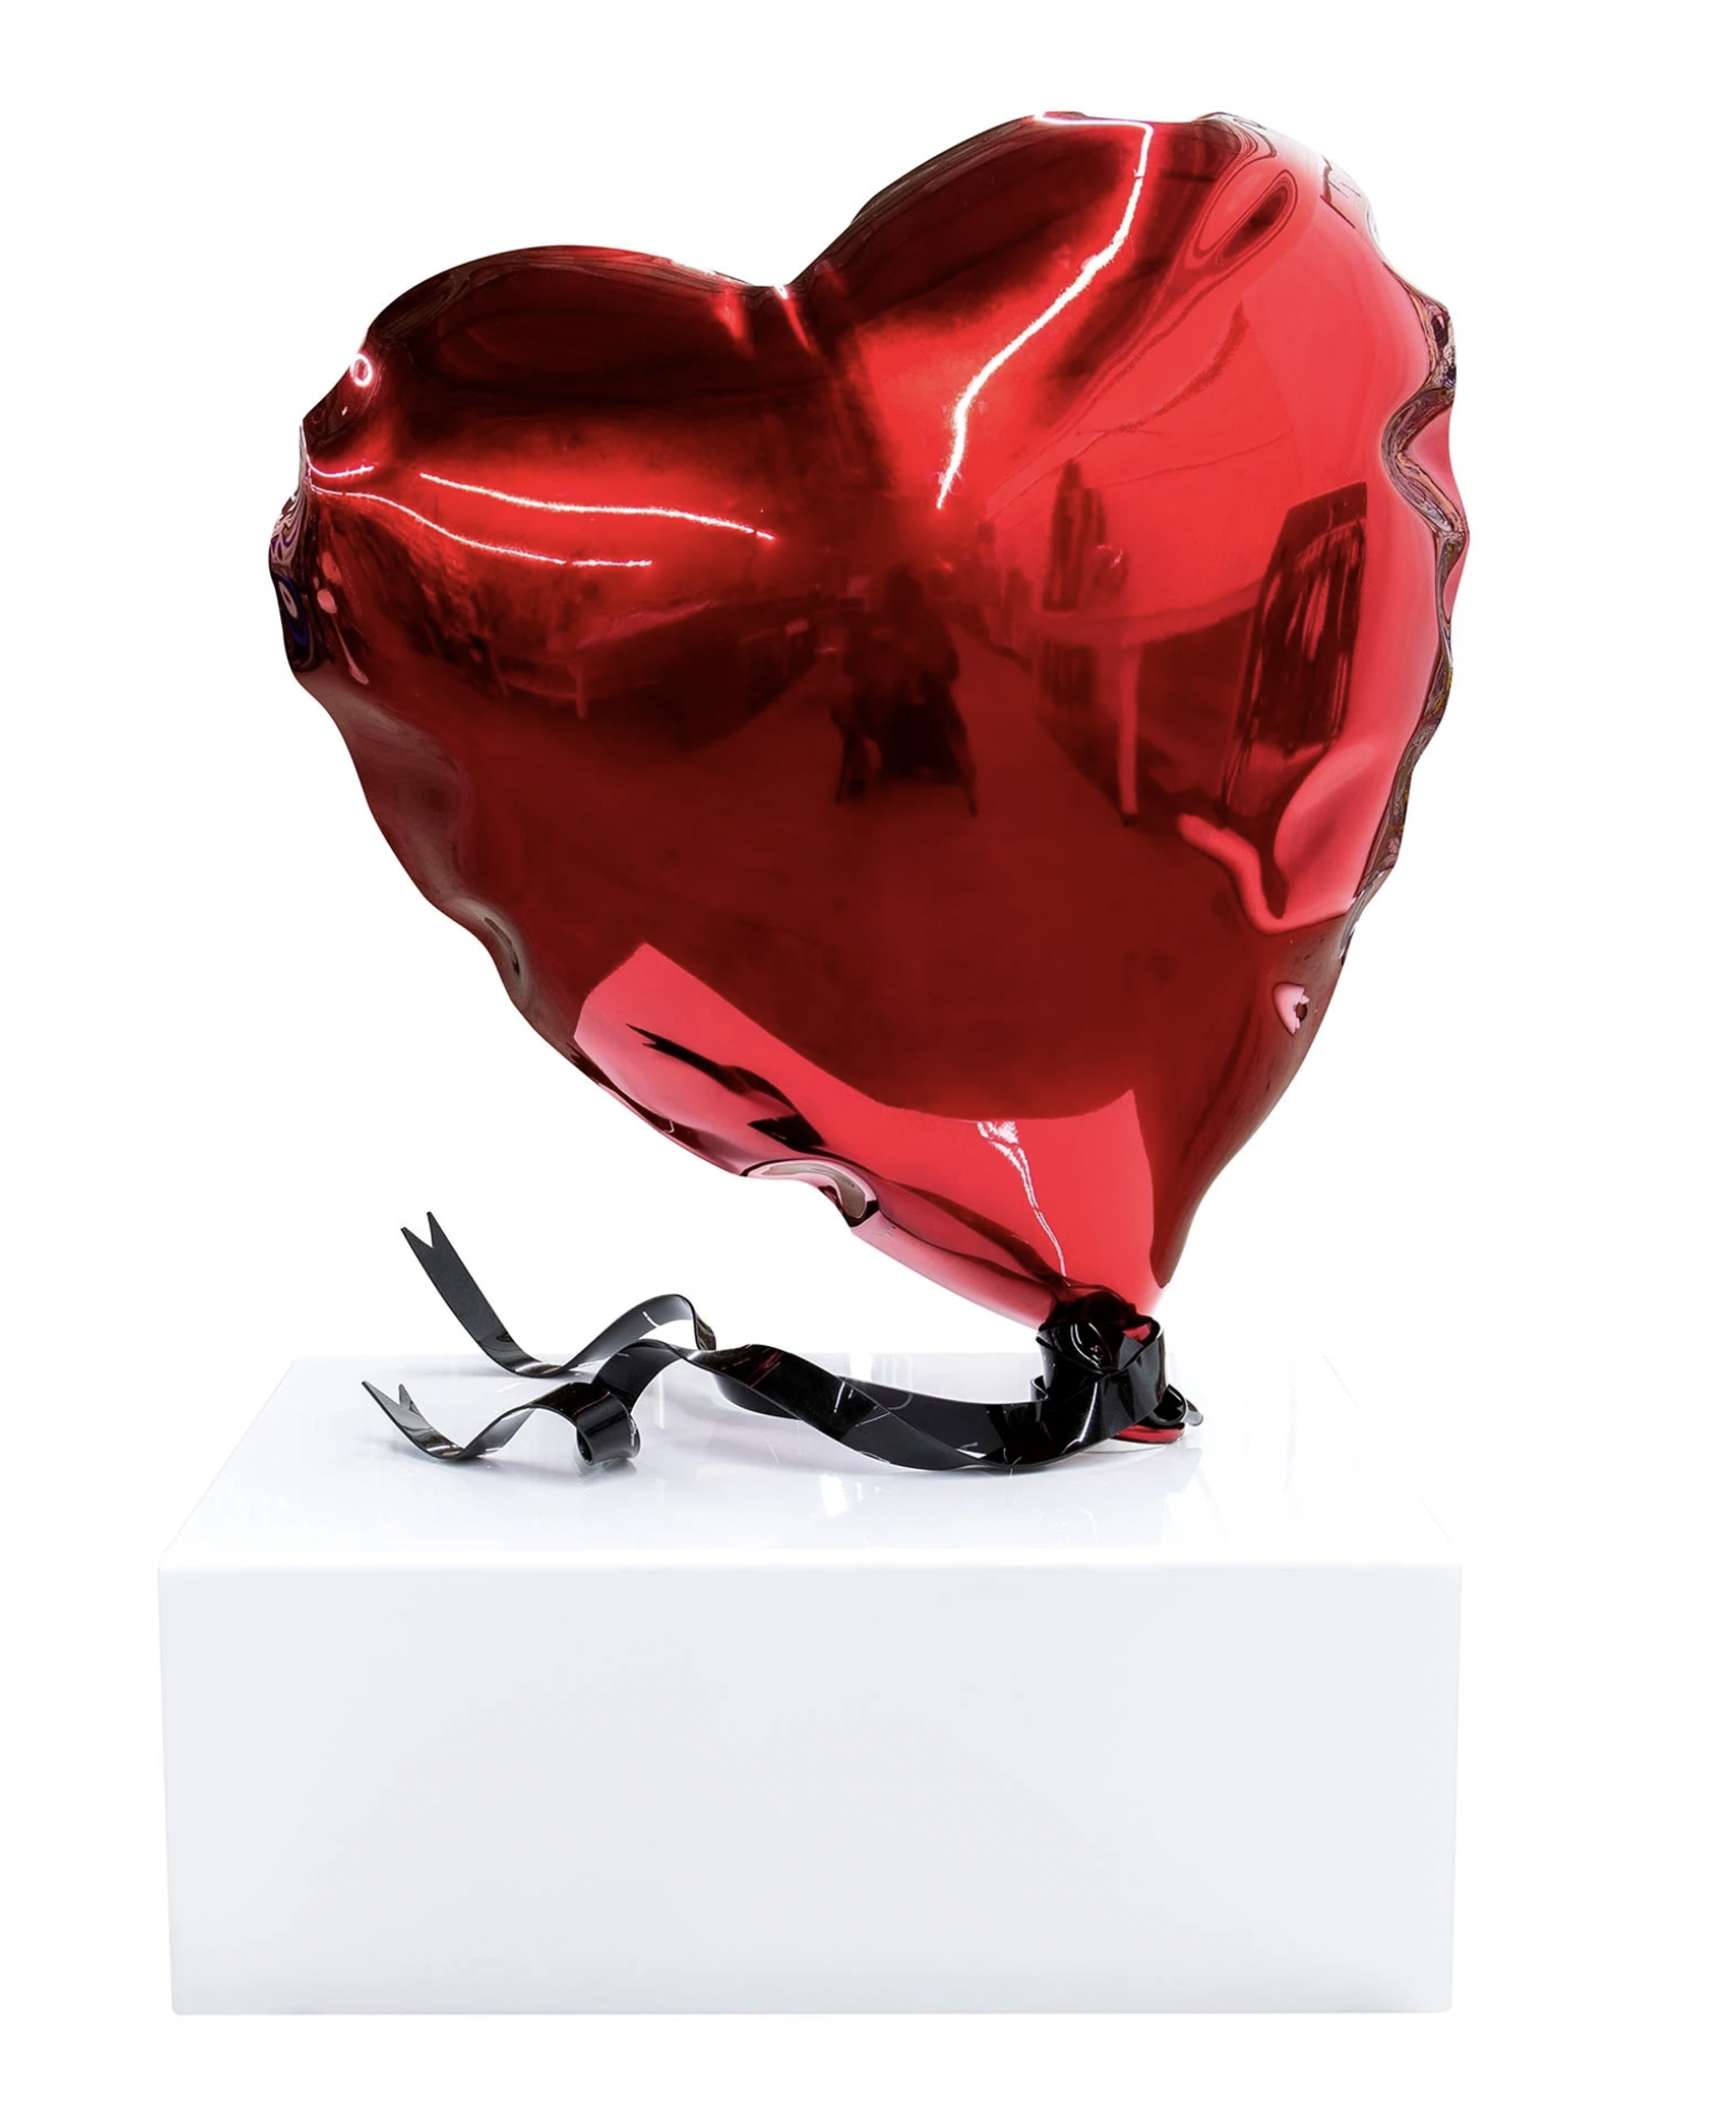 Big Balloon Heart by Mr Brainwash